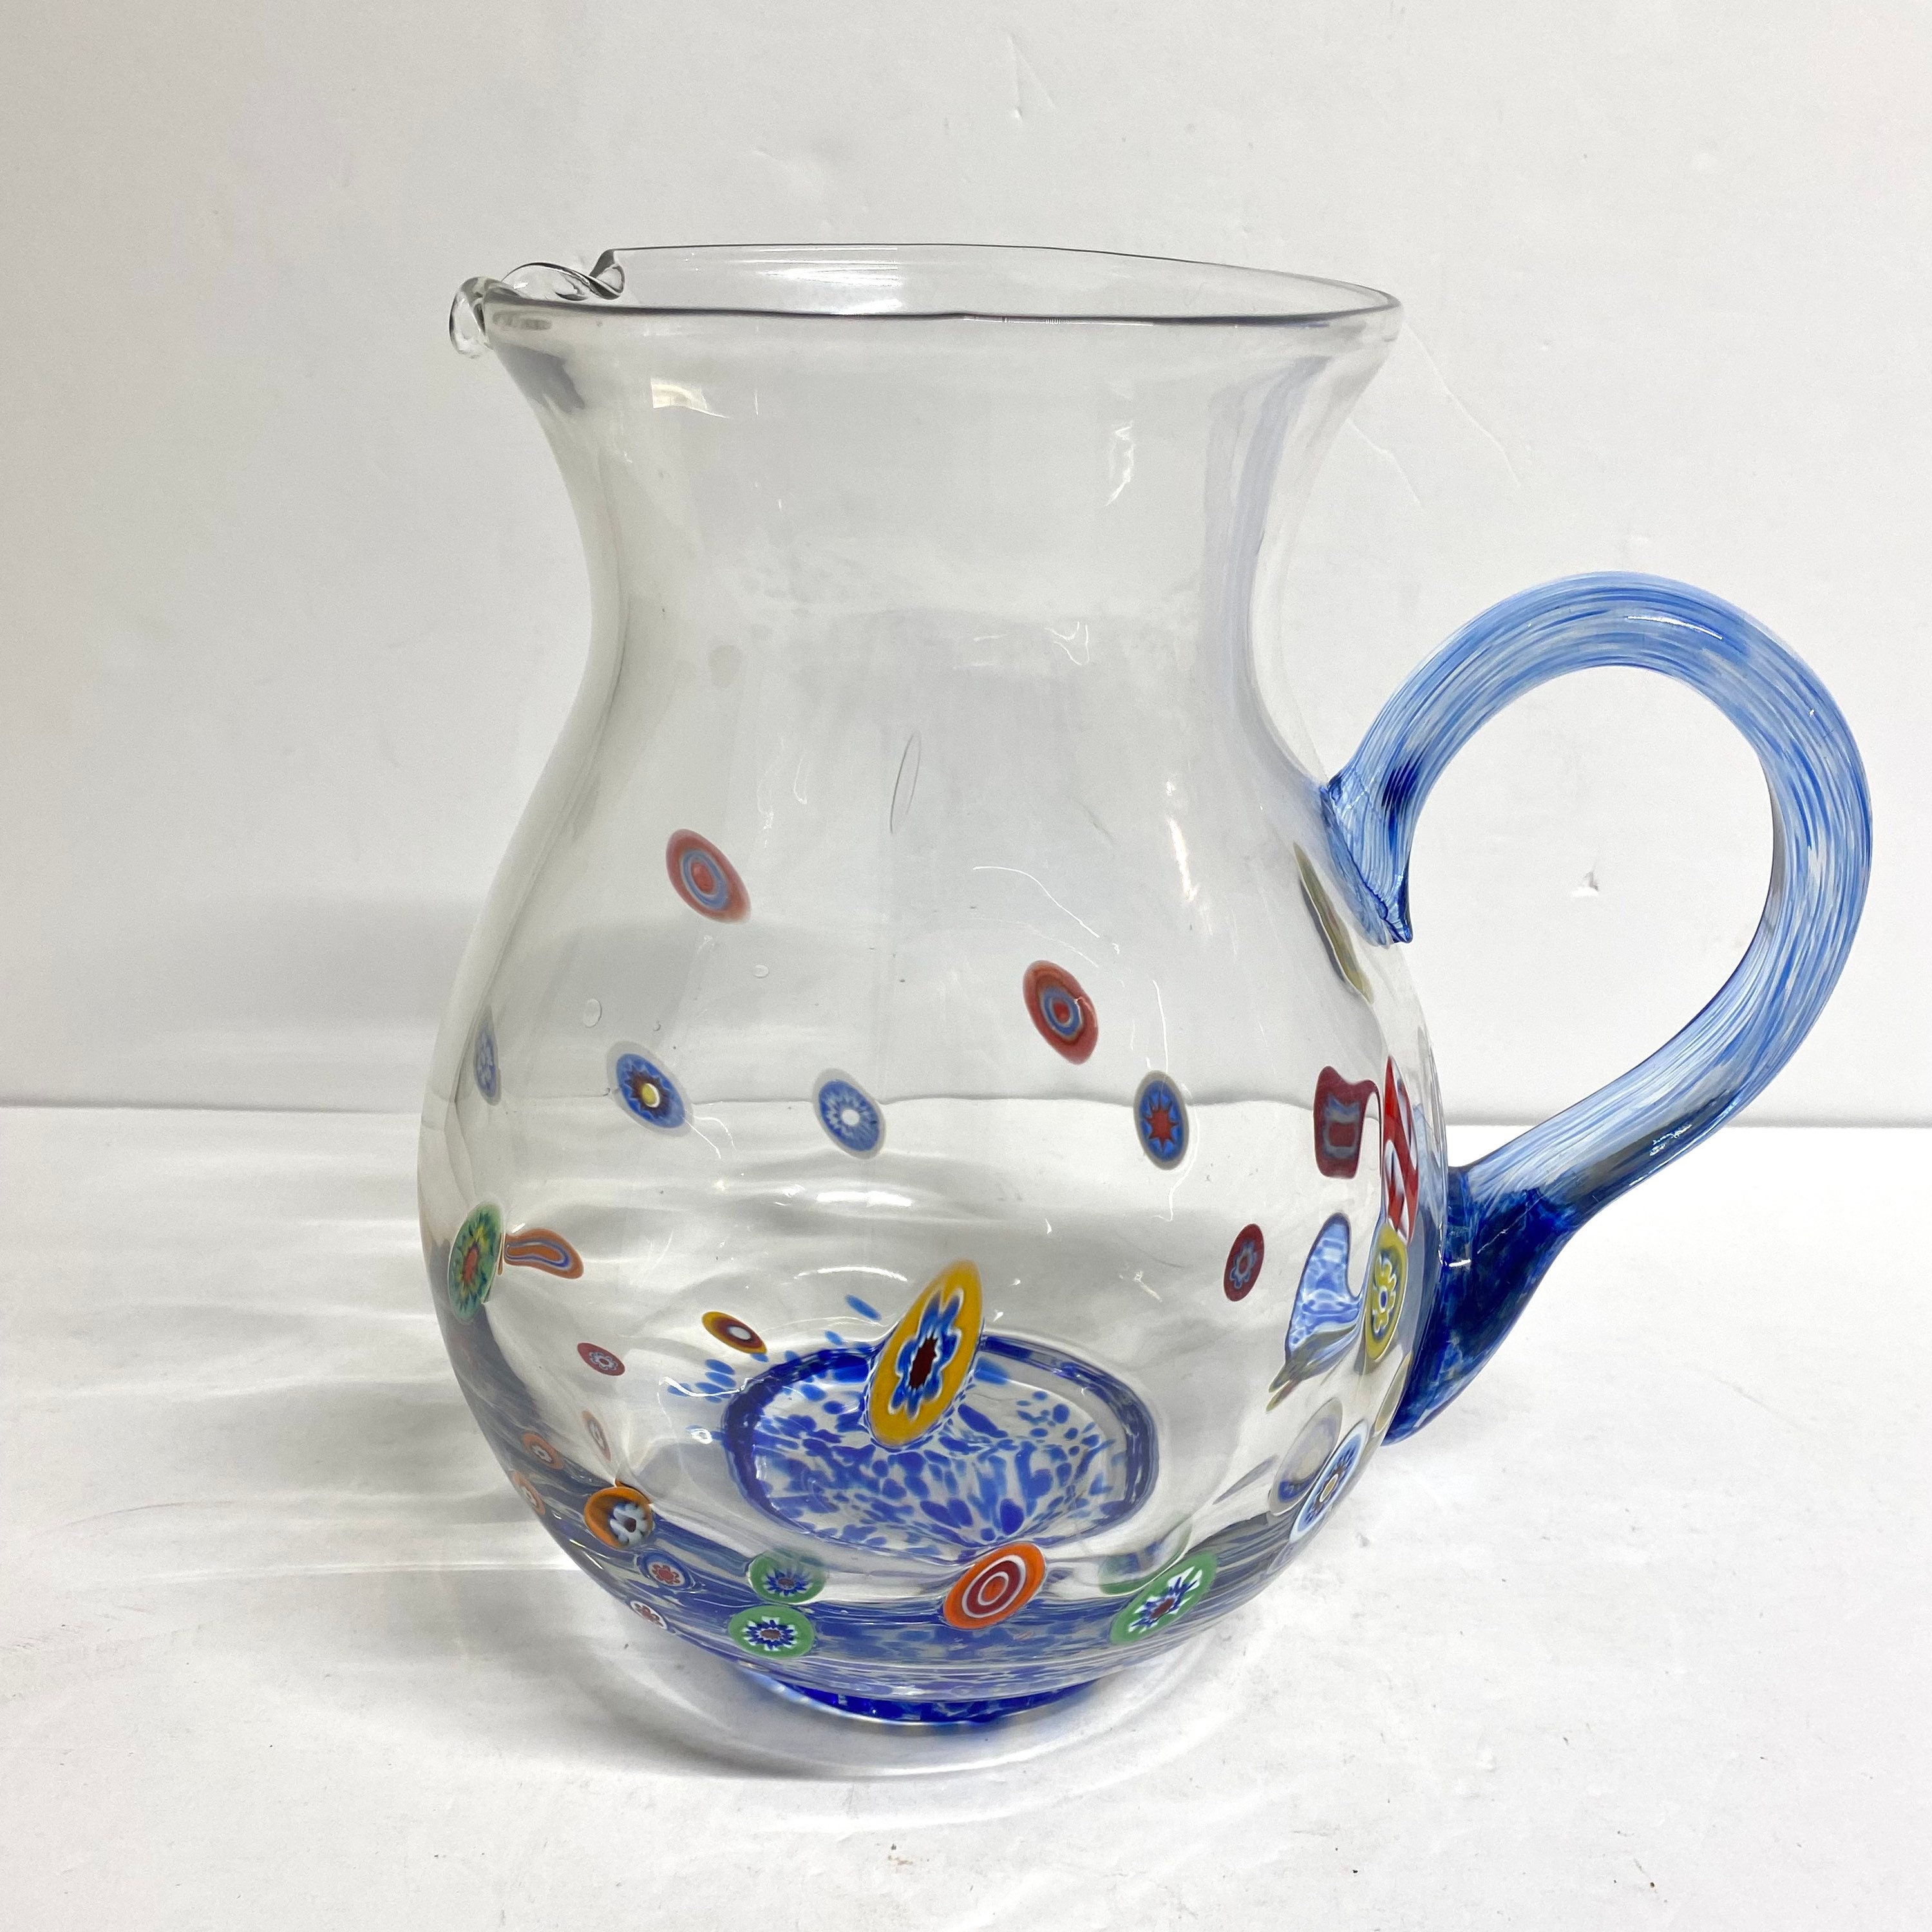 Mariposa Bellini Small Glass Pitcher – Lifelong Collectibles